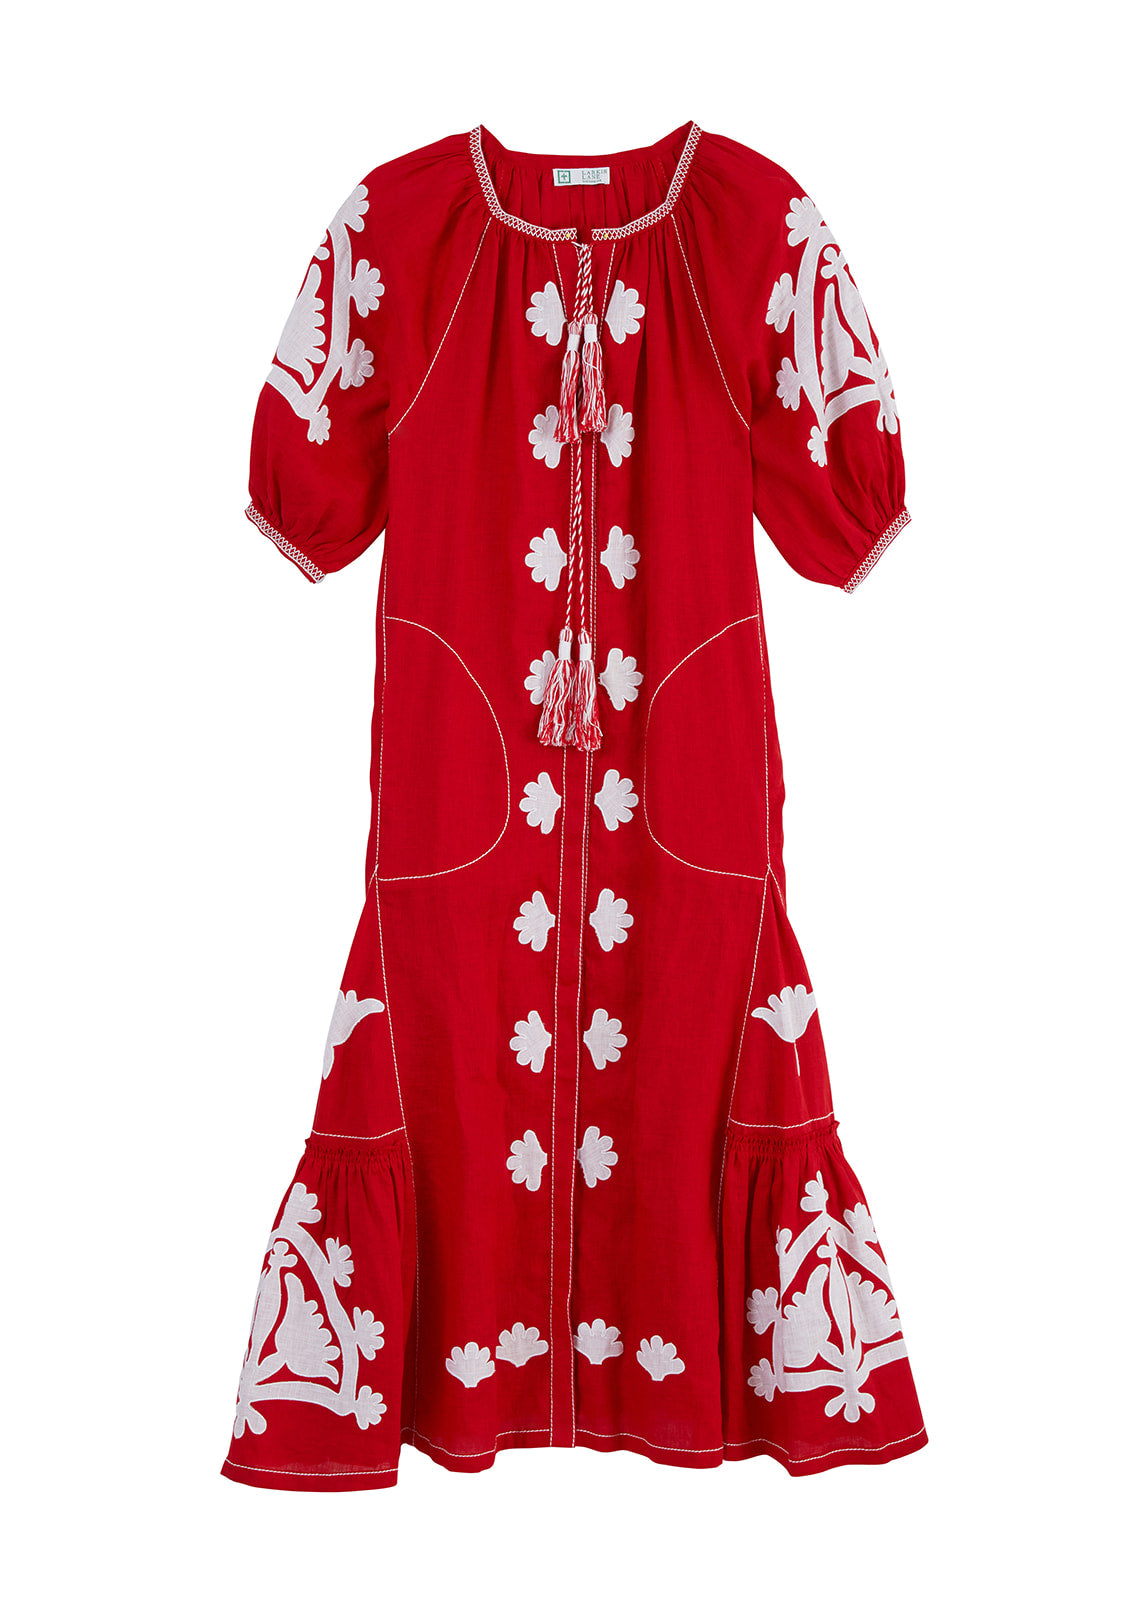 Matisse Embroidered Ukrainian Dress - Red, White